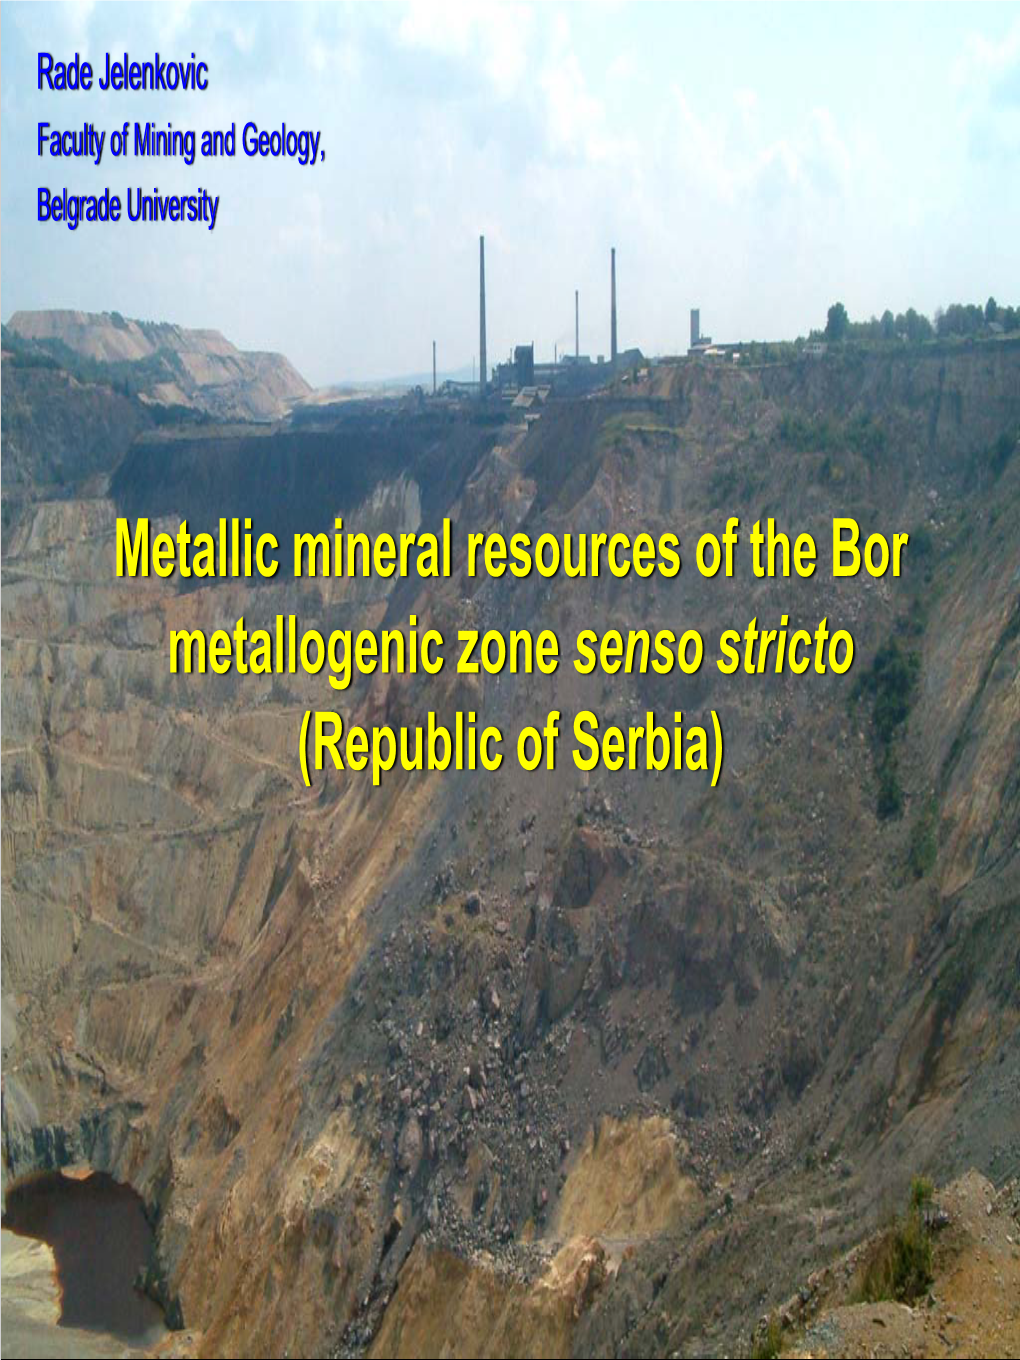 Metallic Mineral Resources of the Bor Metallogenic Zone Senso Stricto (Republic of Serbia)